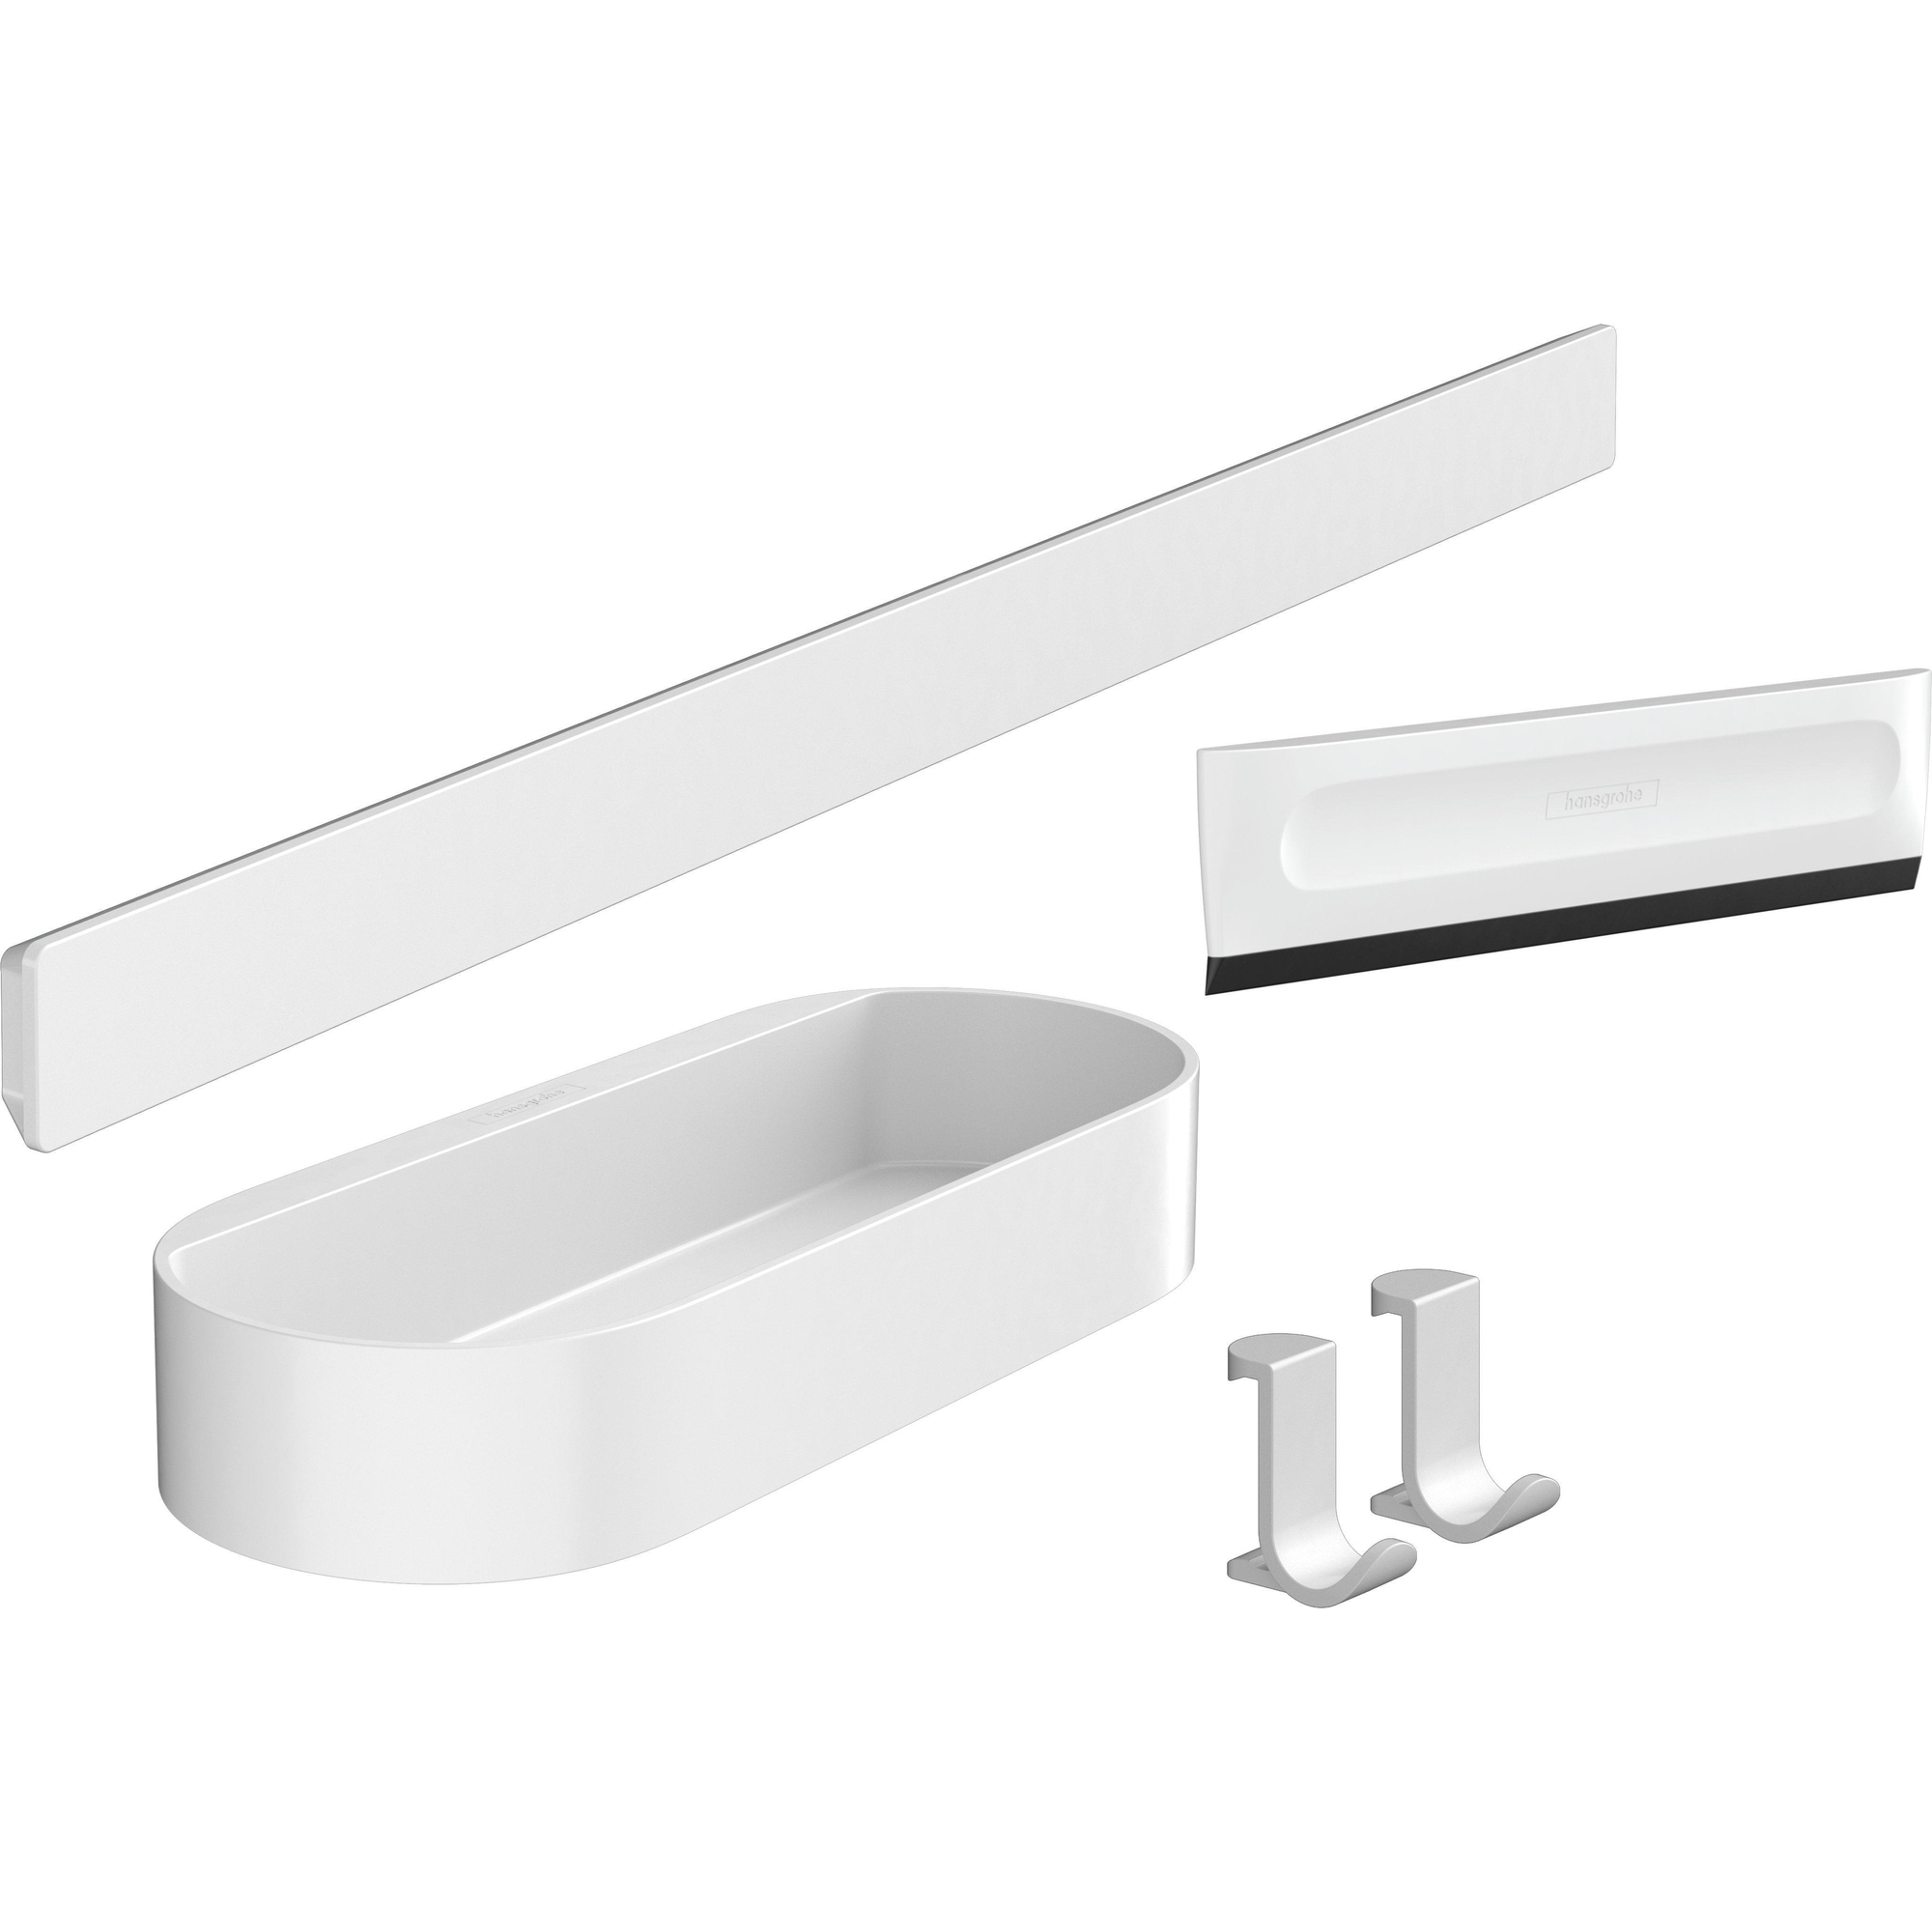 Hansgrohe wallstoris ensemble de toilette blanc mat - 27967700 